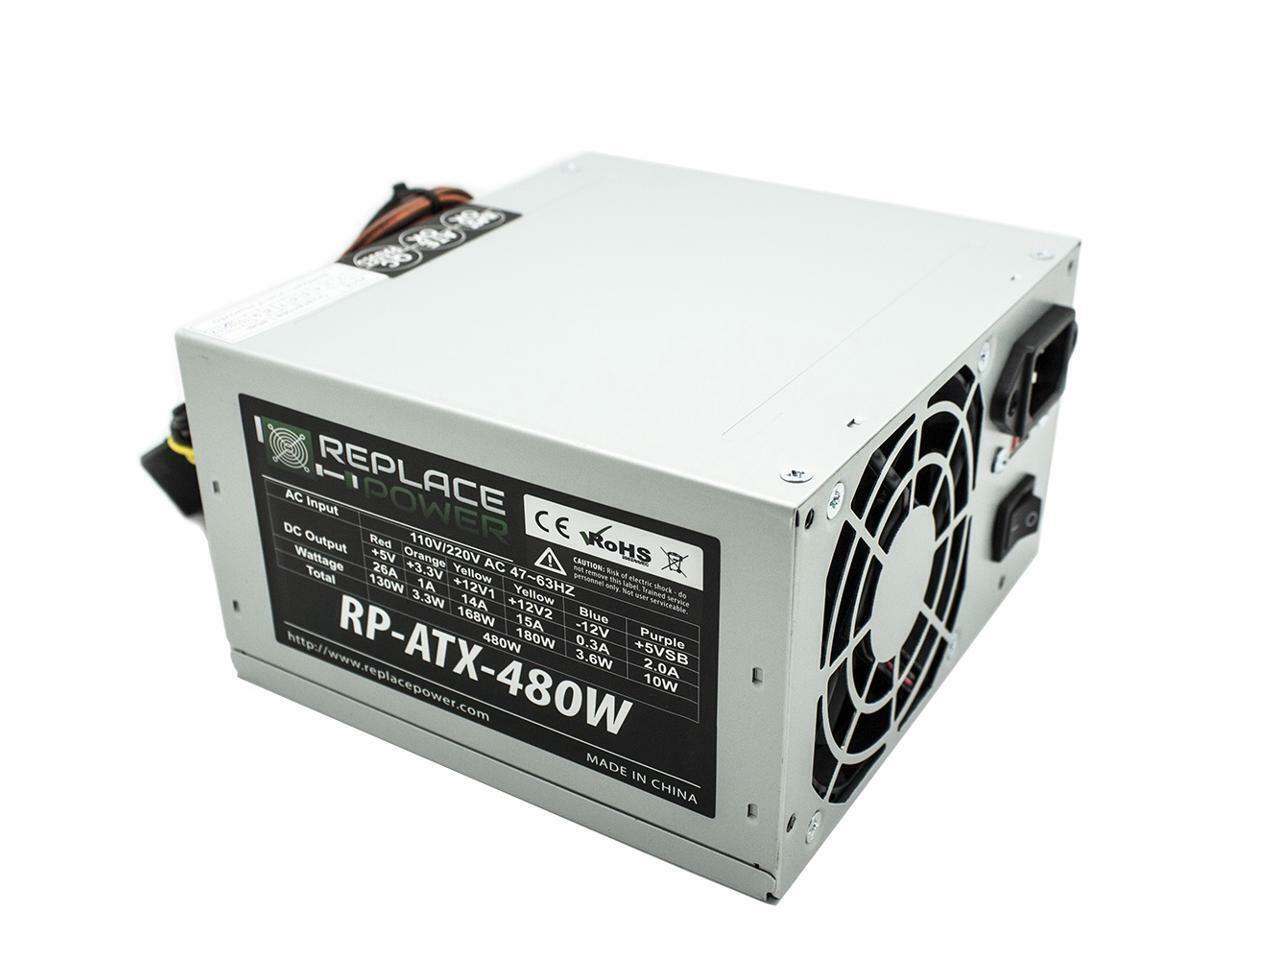 Replace Power 480W ATX Power Supply 204pin w SATA Support RP-ATX-480W